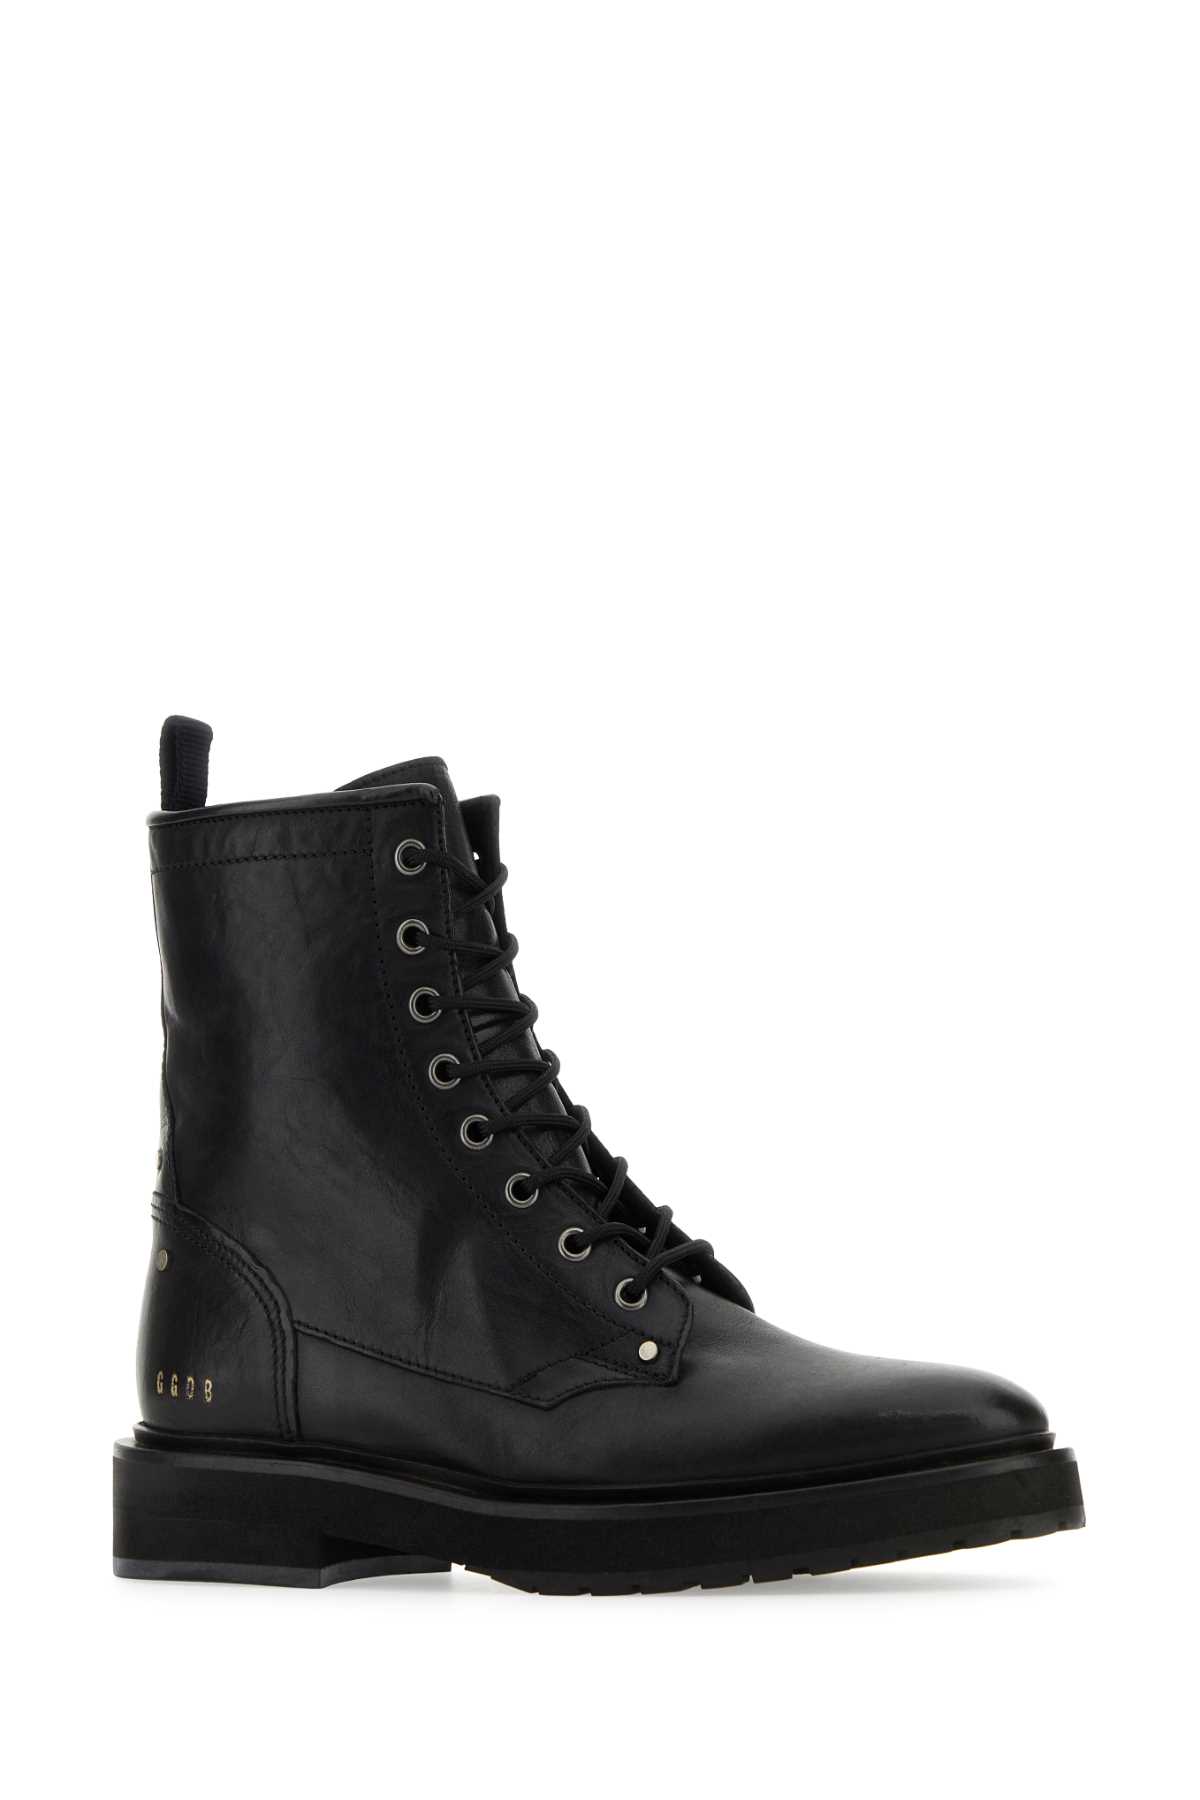 Shop Golden Goose Black Leather Combat Ankle Boots